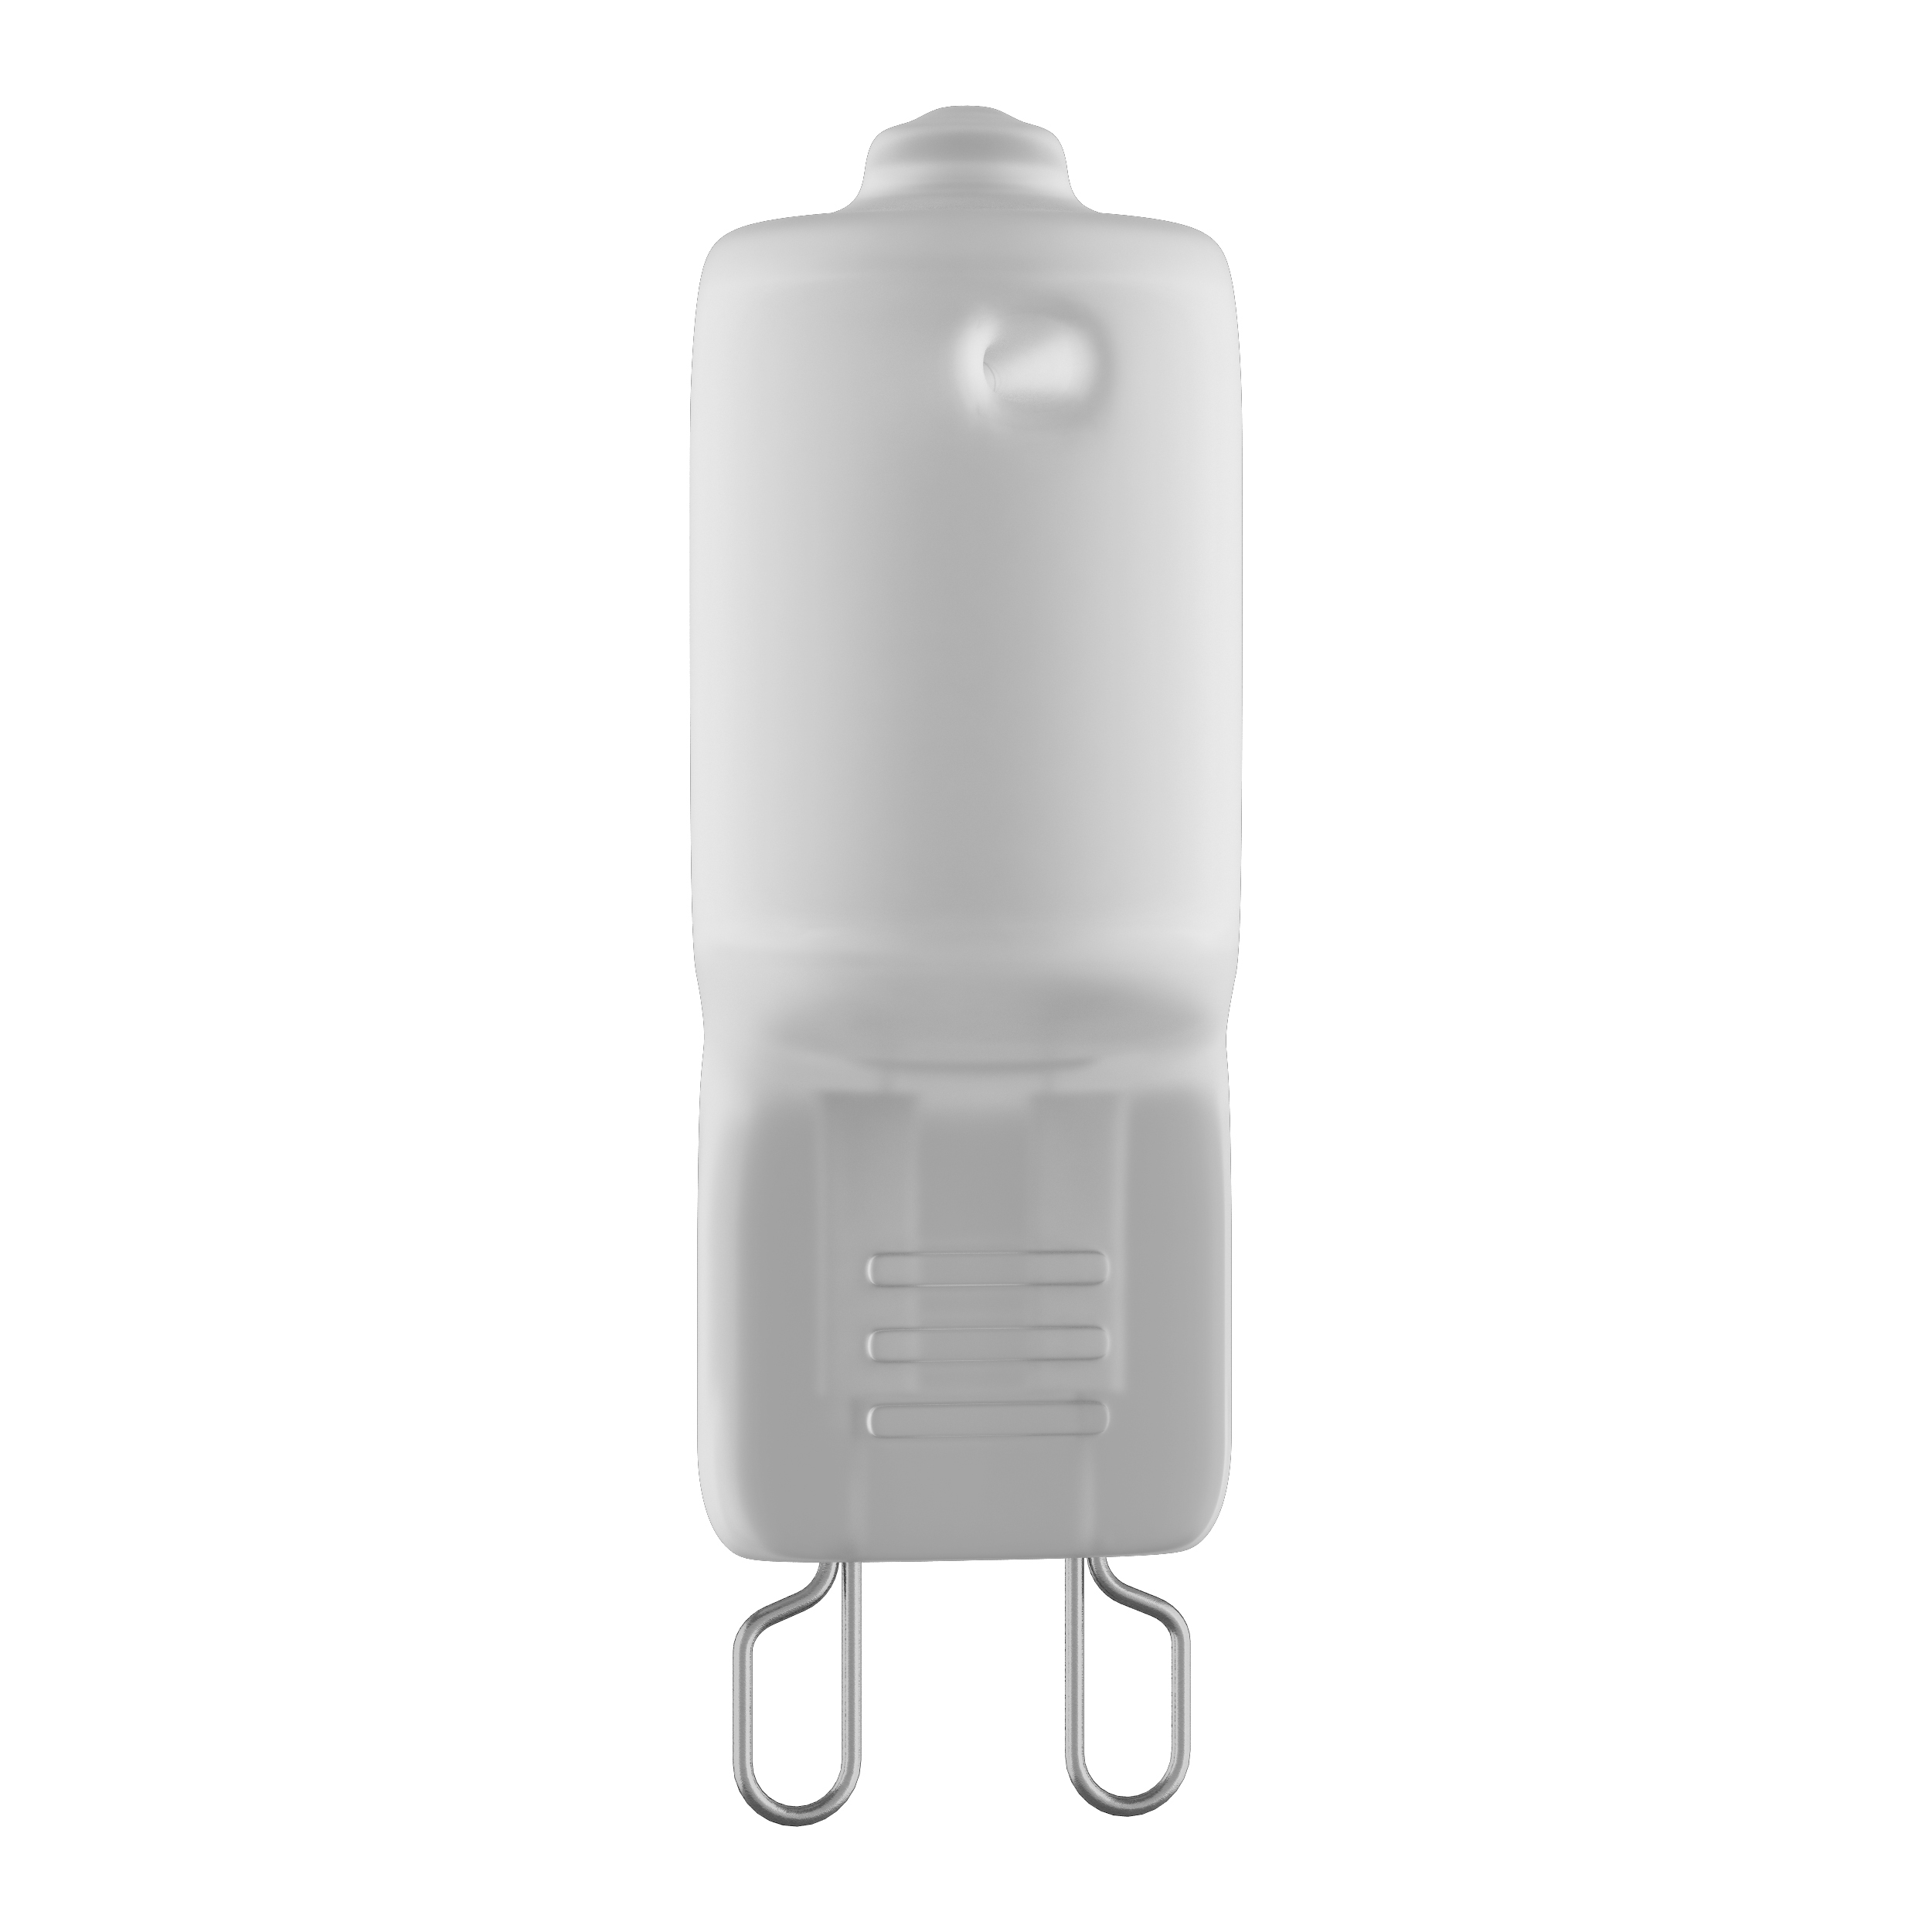 Галогенная лампа Lightstar HAL 922033 капсульная G9 40W, 2800K (теплый) 220V, диммируемая, гарантия нет гарантии - фото 1